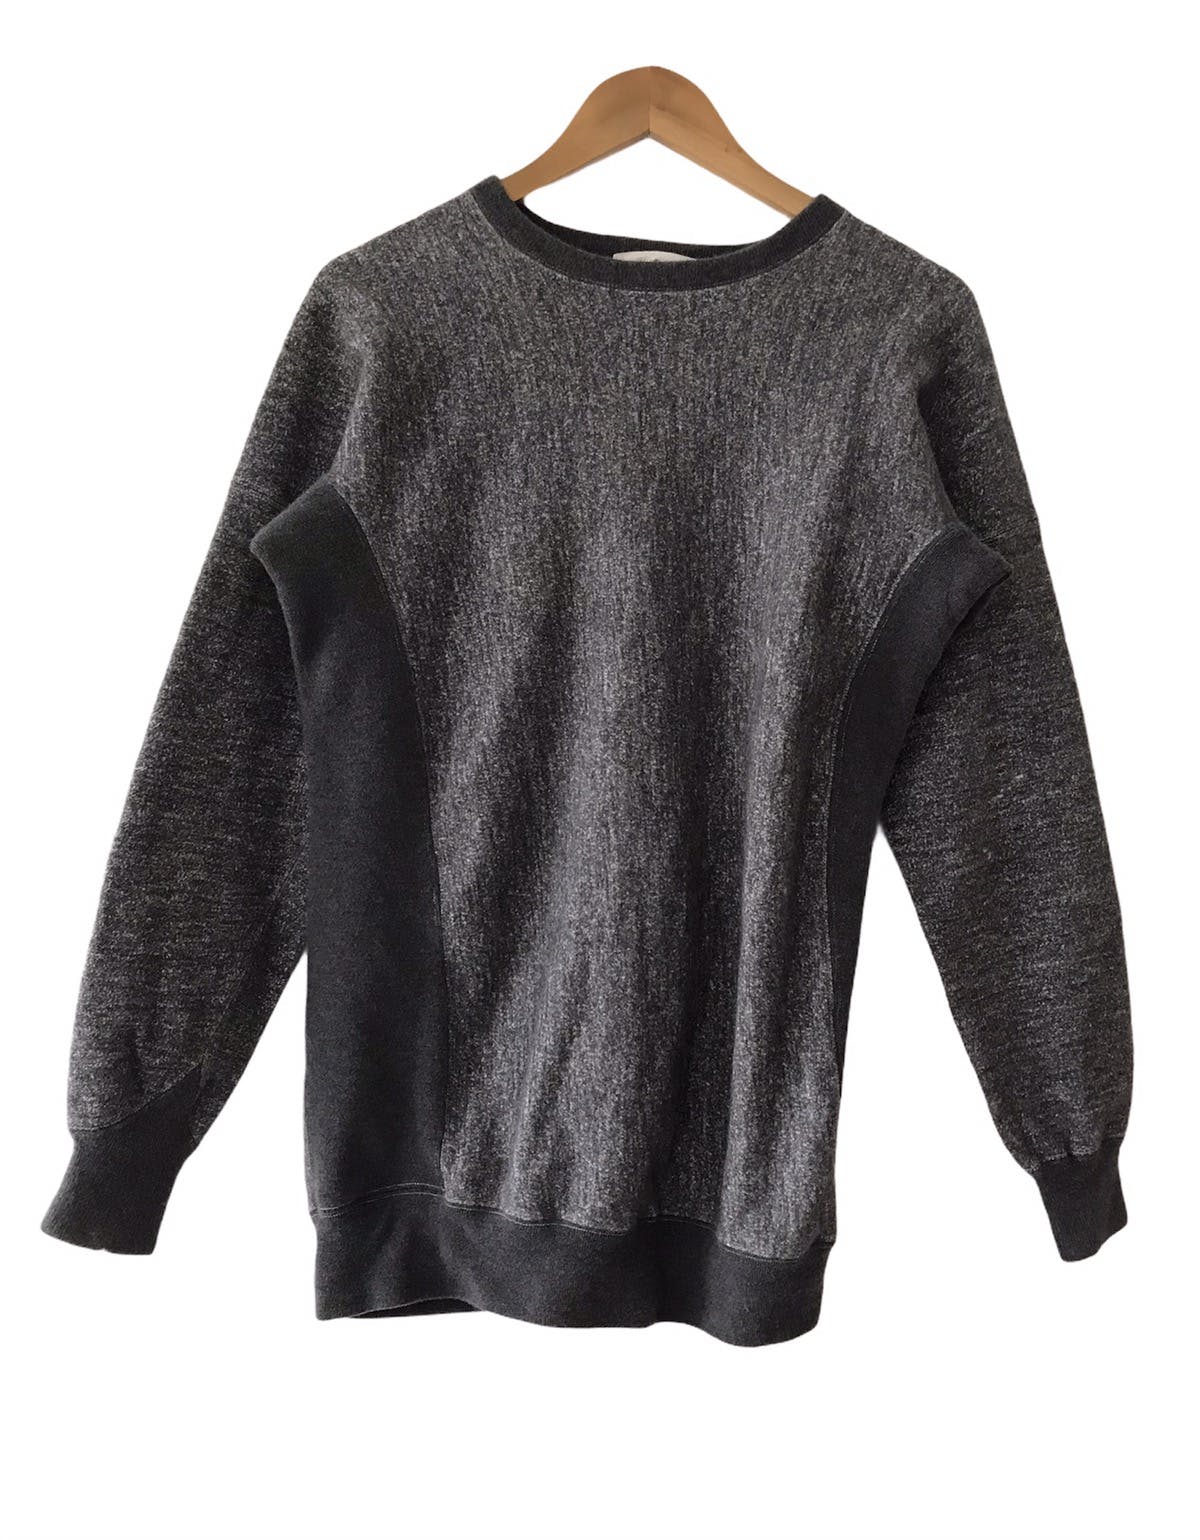 1998 General Reseach wool sweater - 1